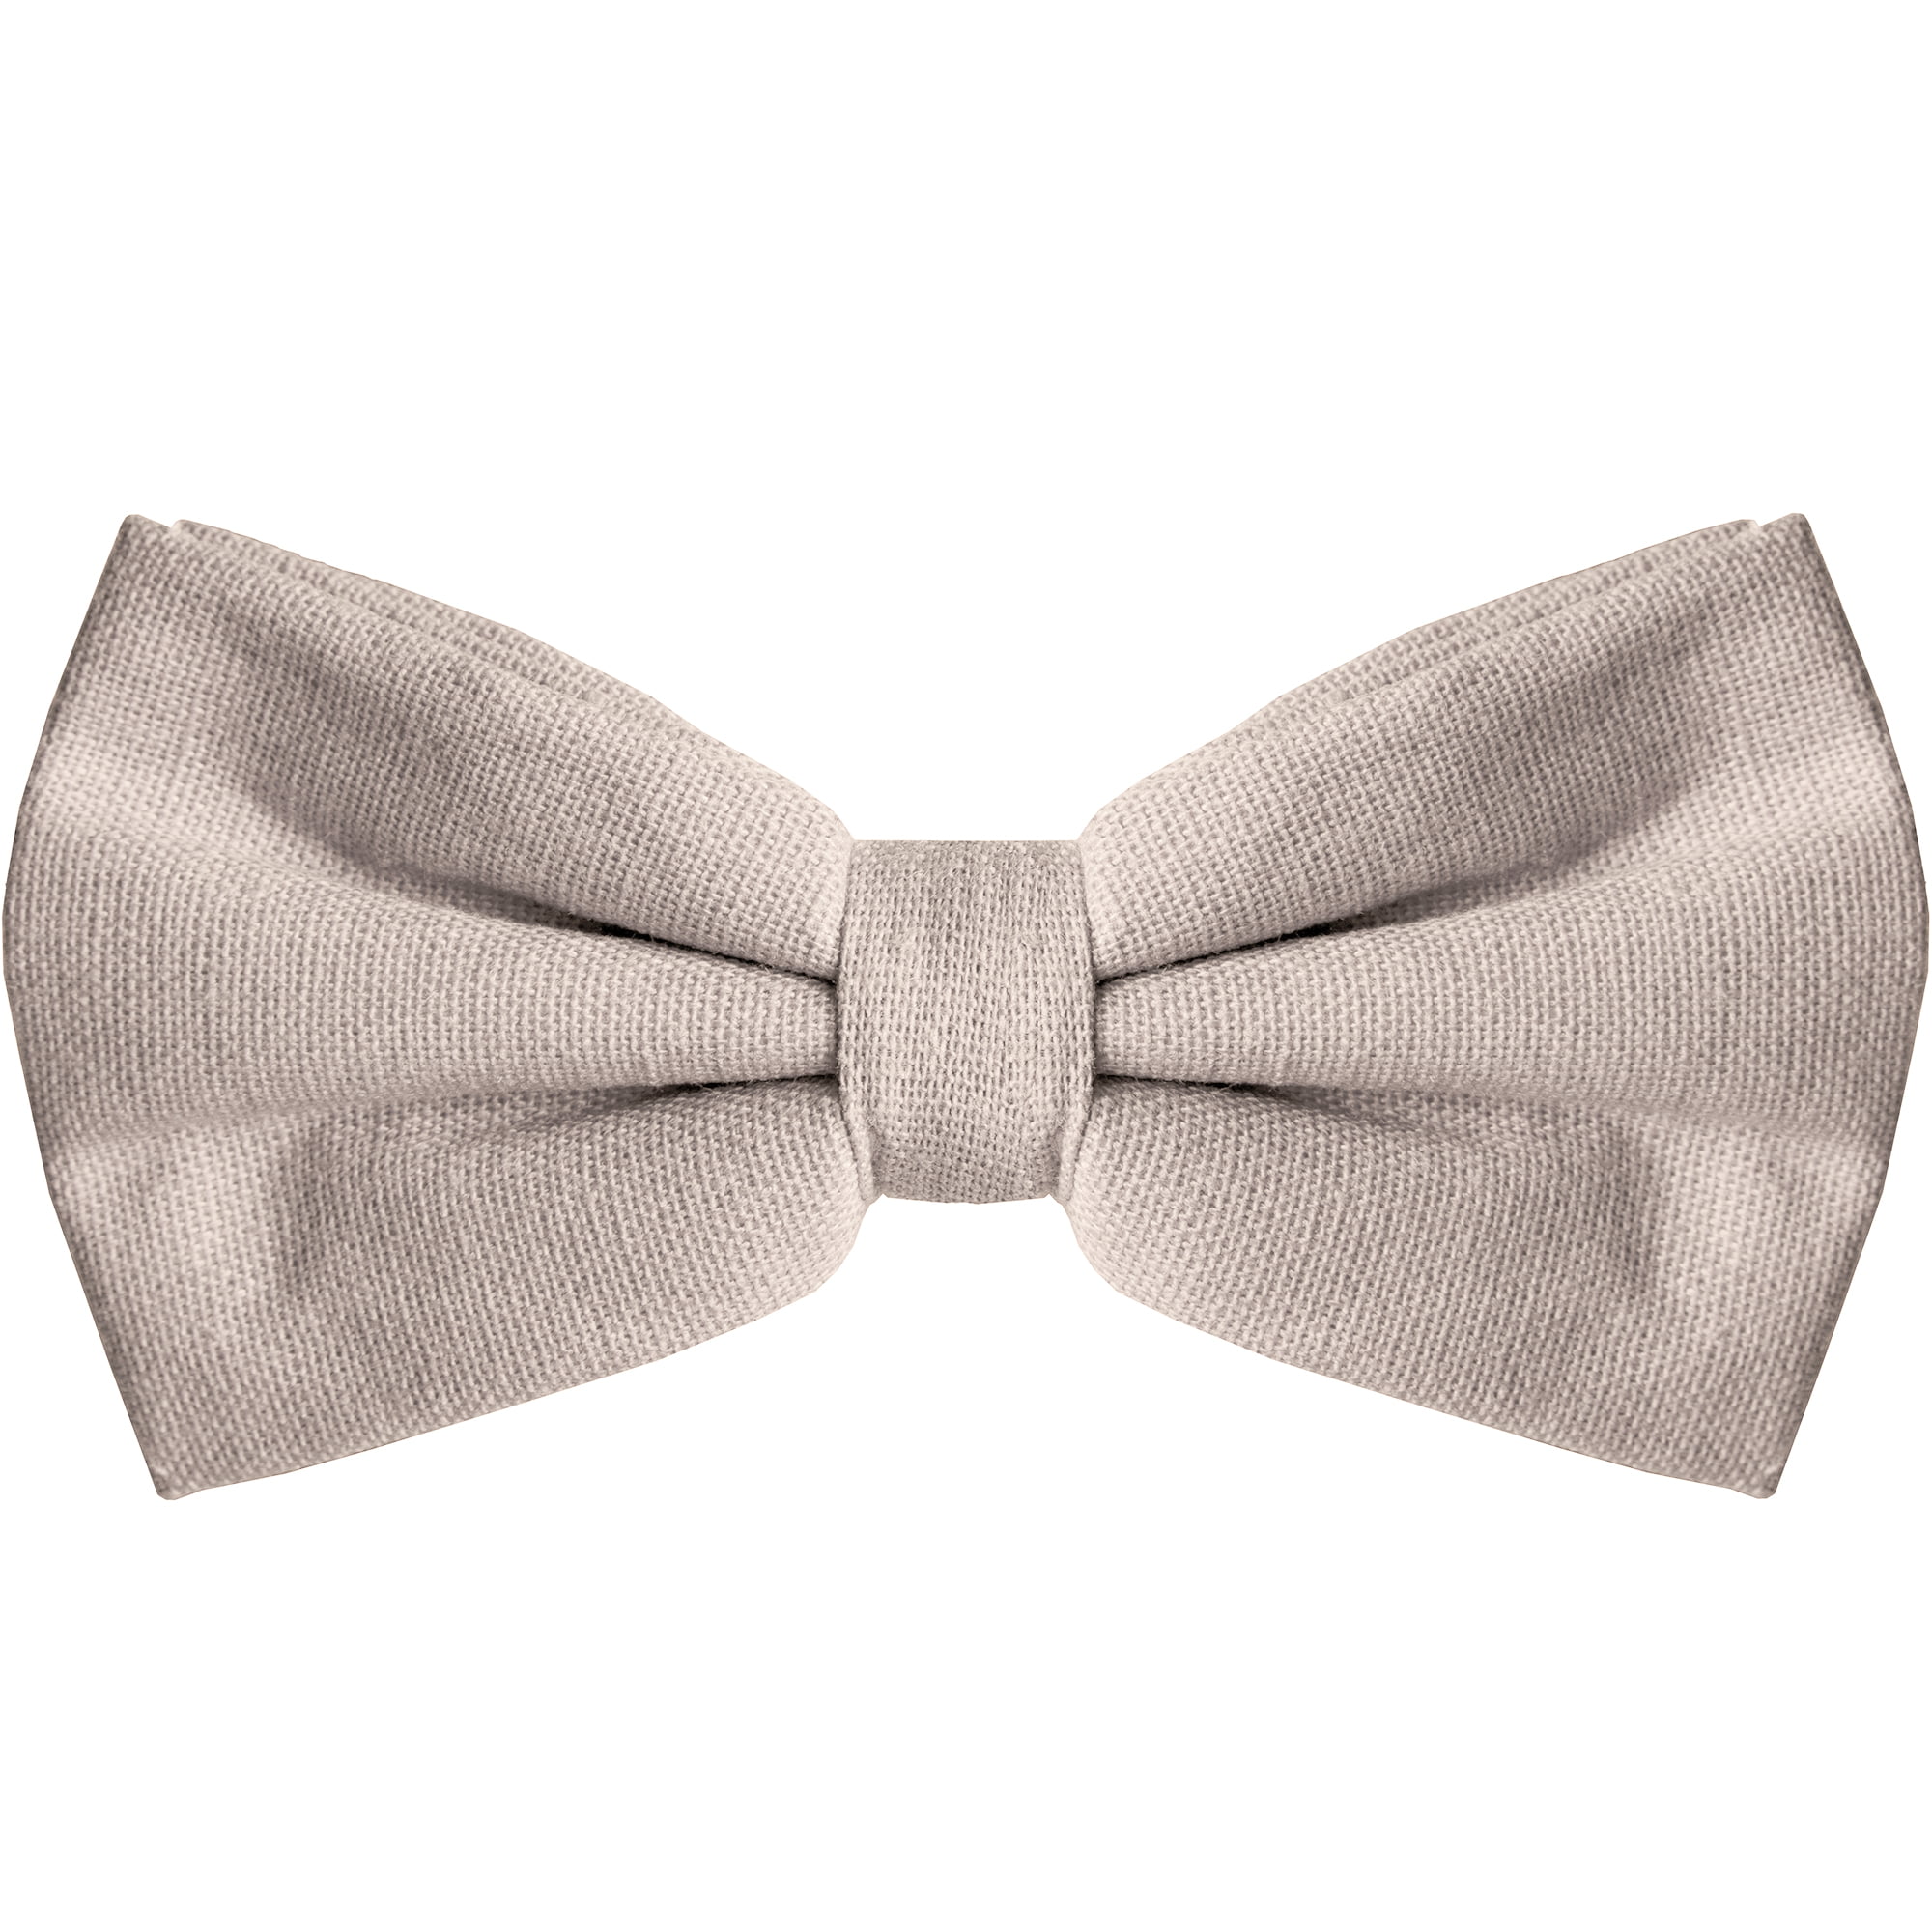 Platinum Hanger - Bow Tie for Men Ties ? Mens Pre Tied Formal Tuxedo ...